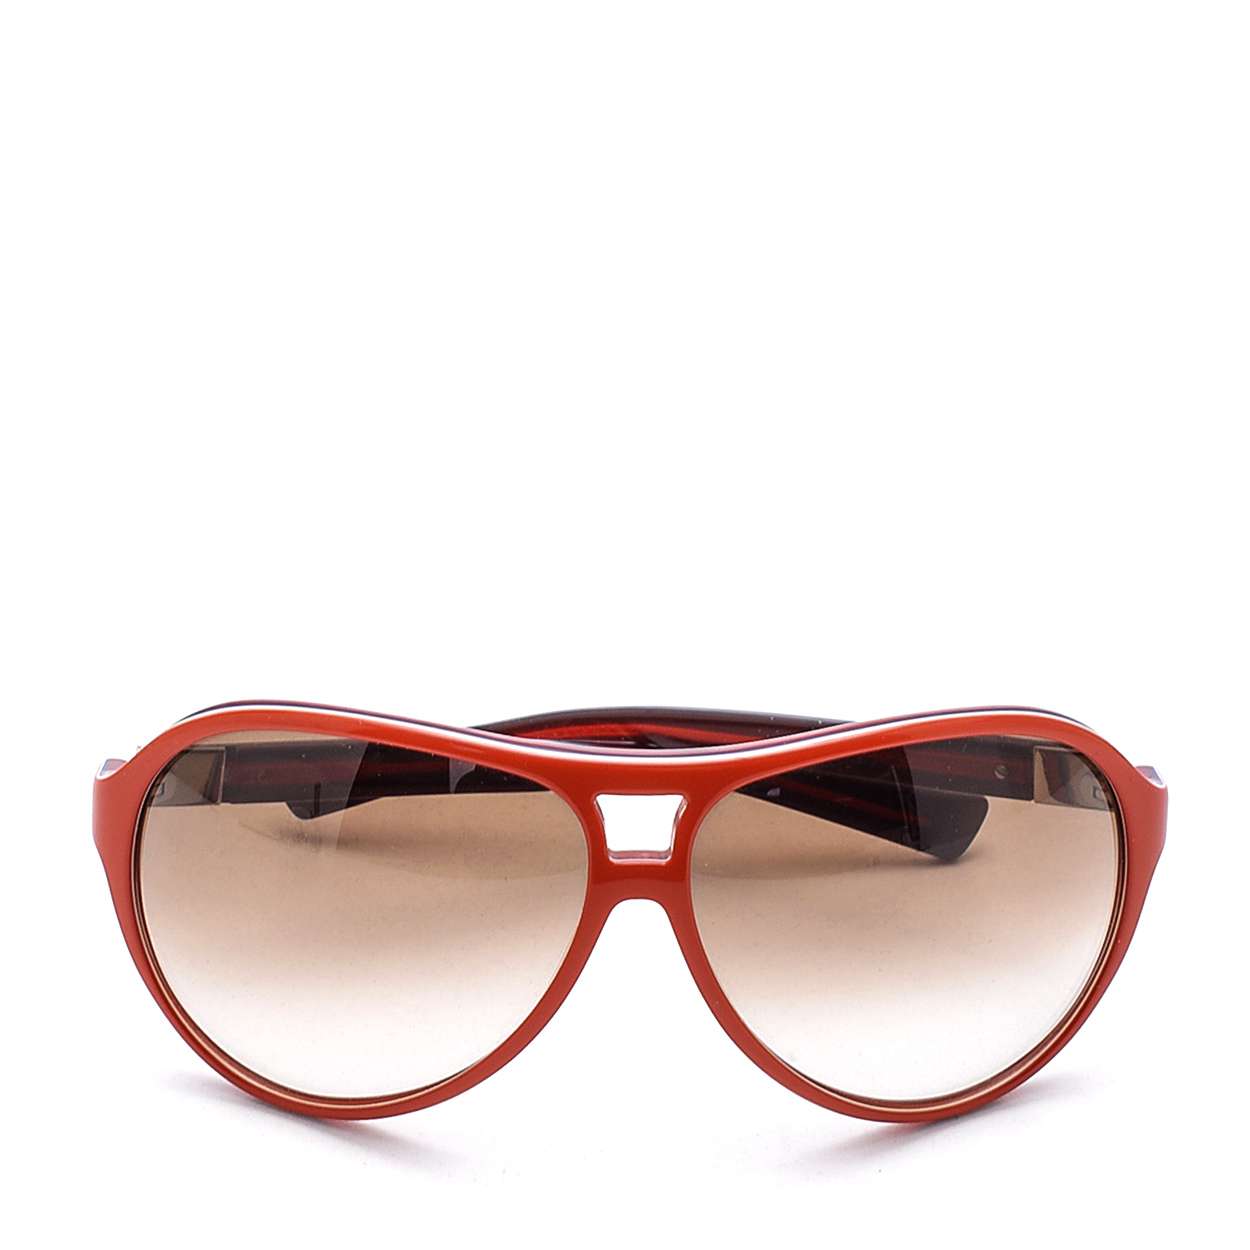 Marc Jacobs - Red Degrade Grey Lens Sunglasses